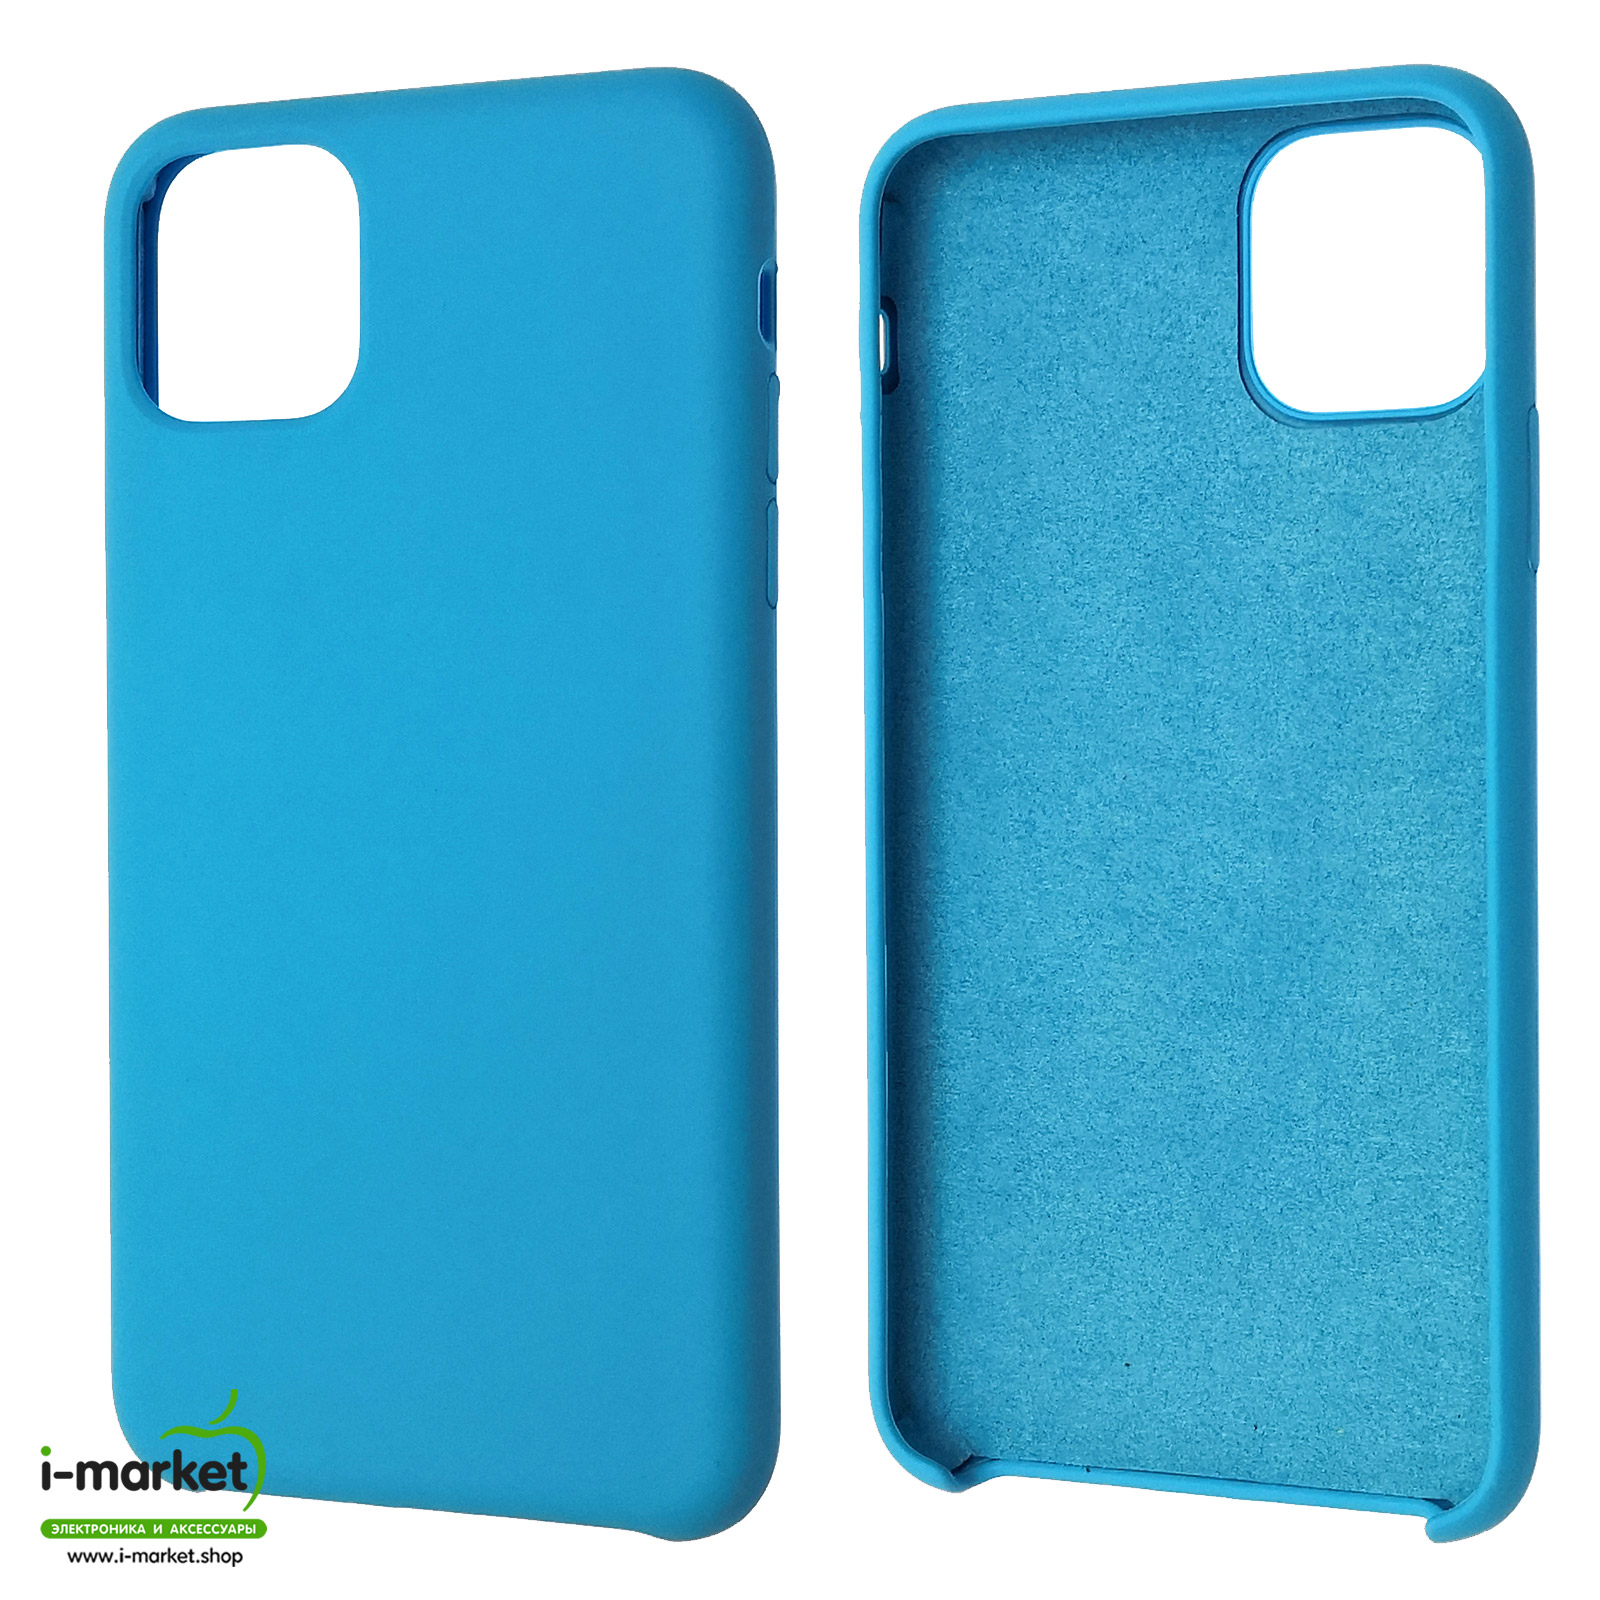 Чехол накладка Silicon Case для APPLE iPhone 11 Pro MAX 2019, силикон, бархат, цвет ярко голубой